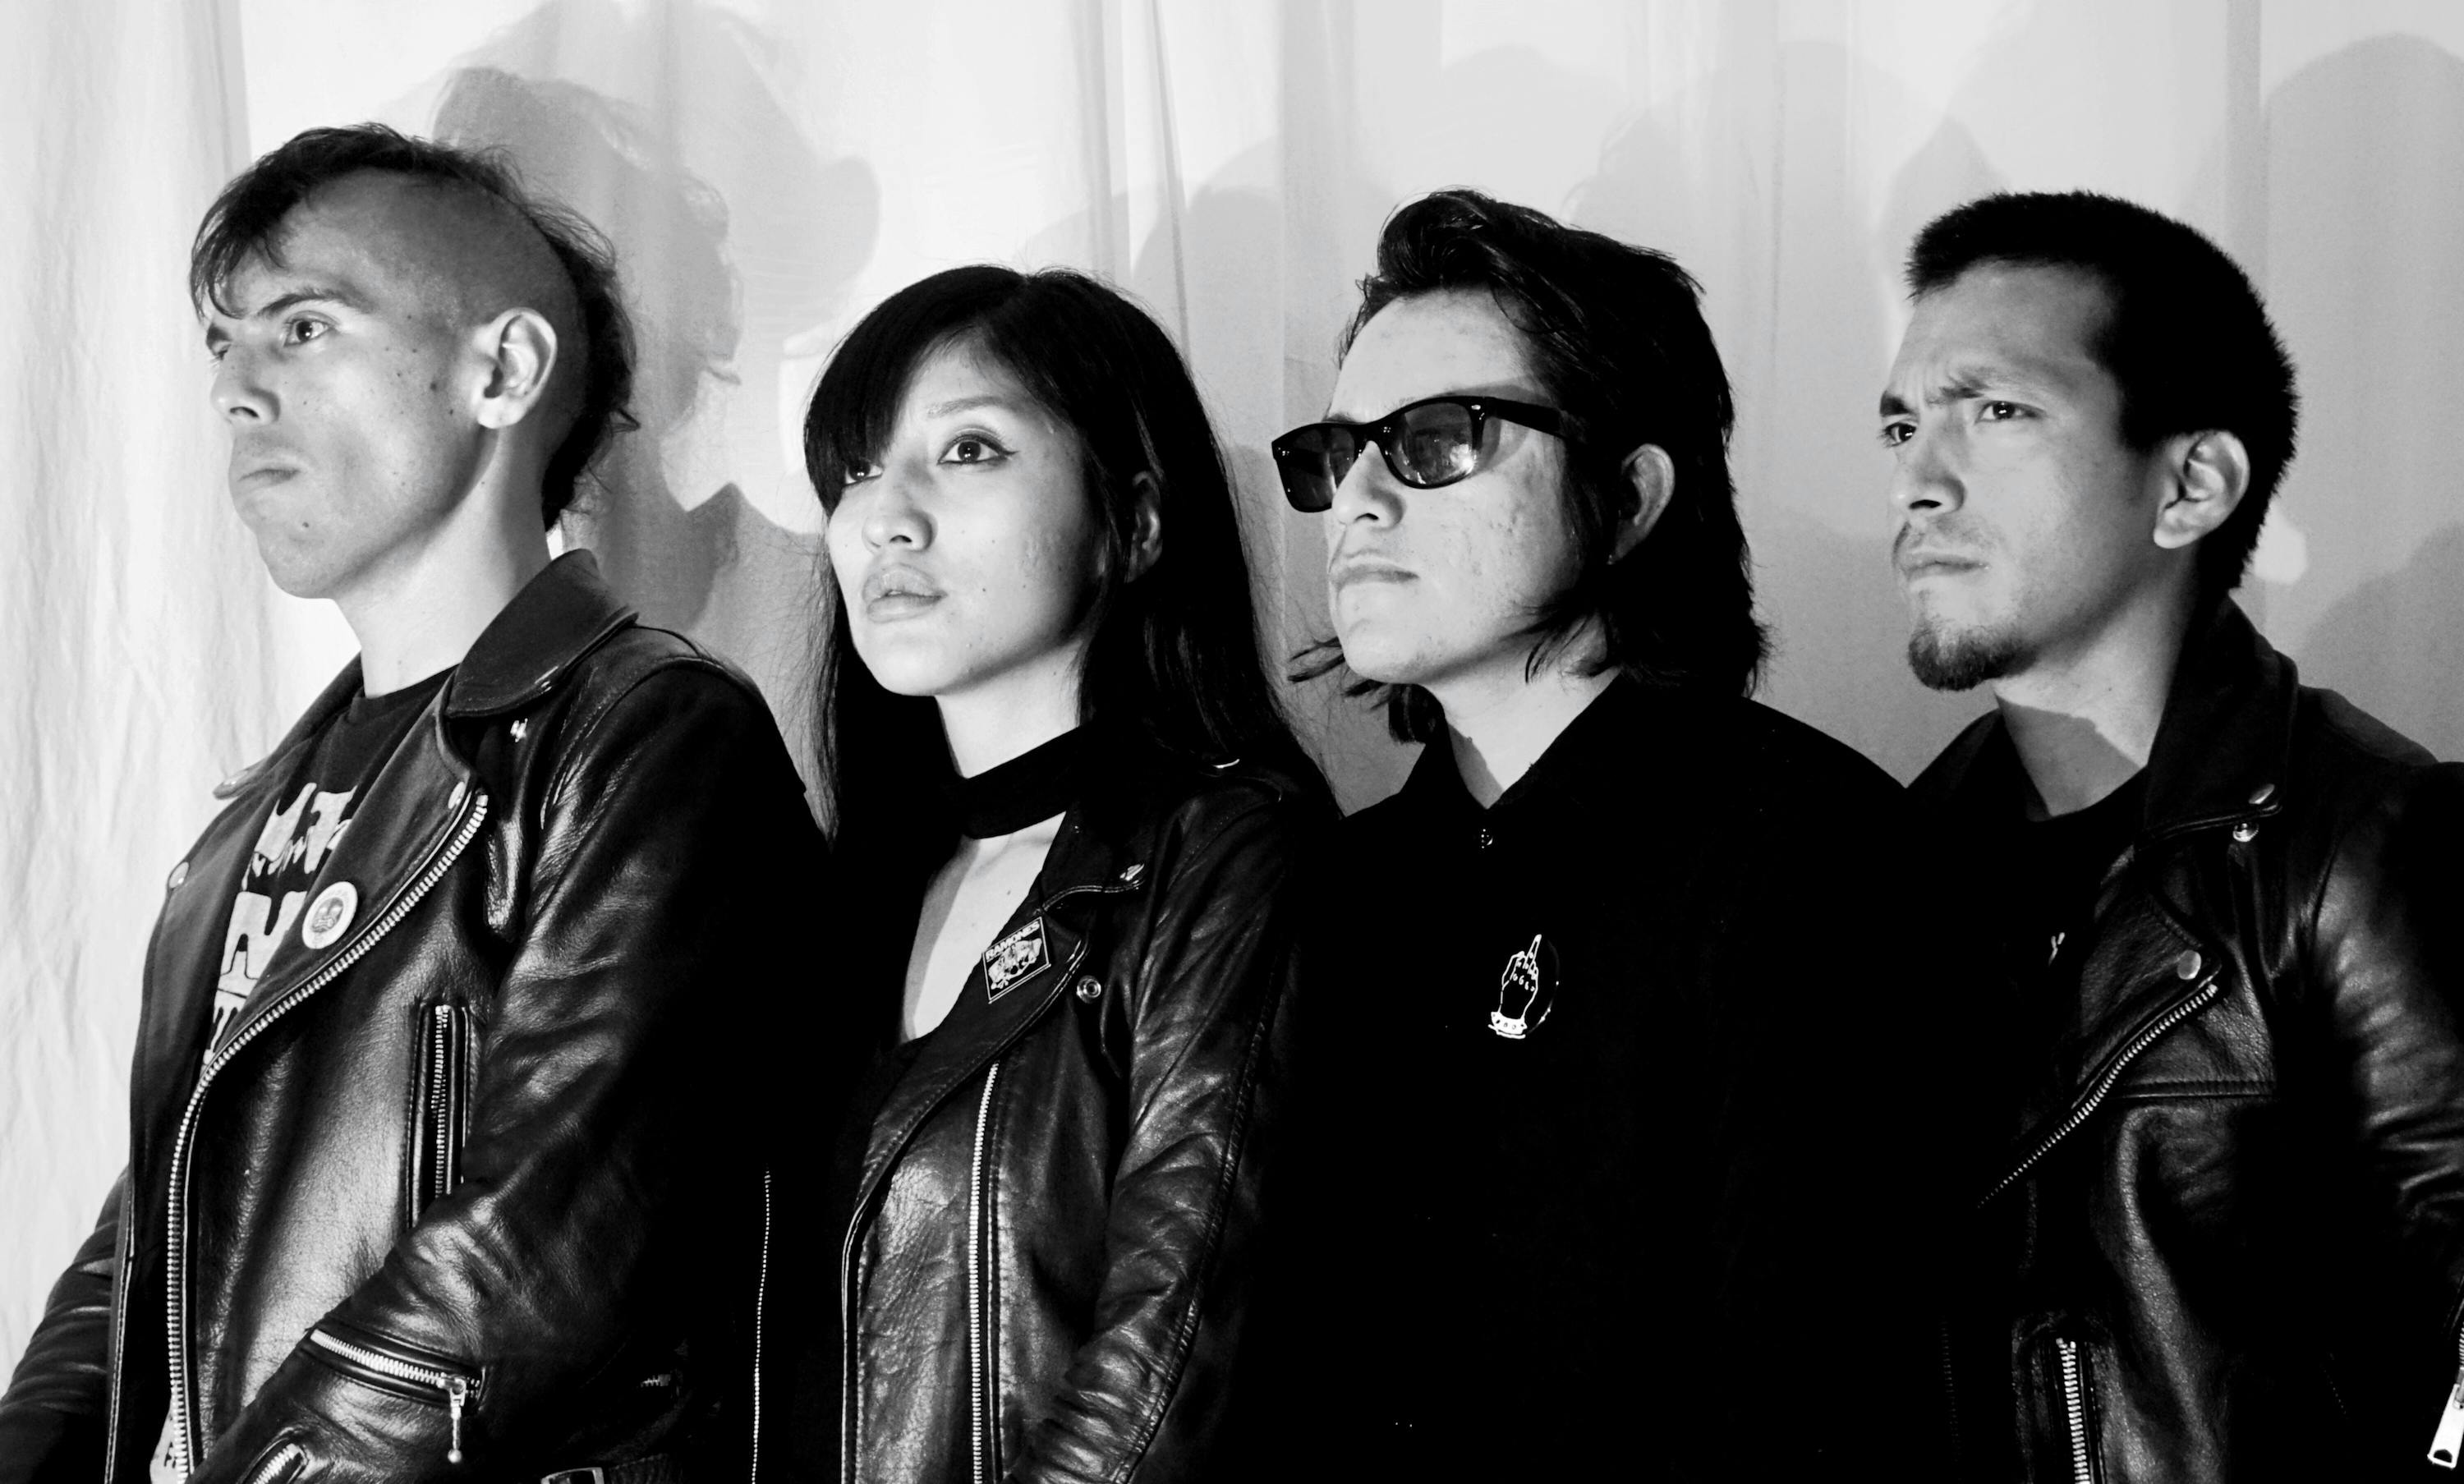 Meet Los Angeles’s Most Authentic Punk Band: Generacion Suicida